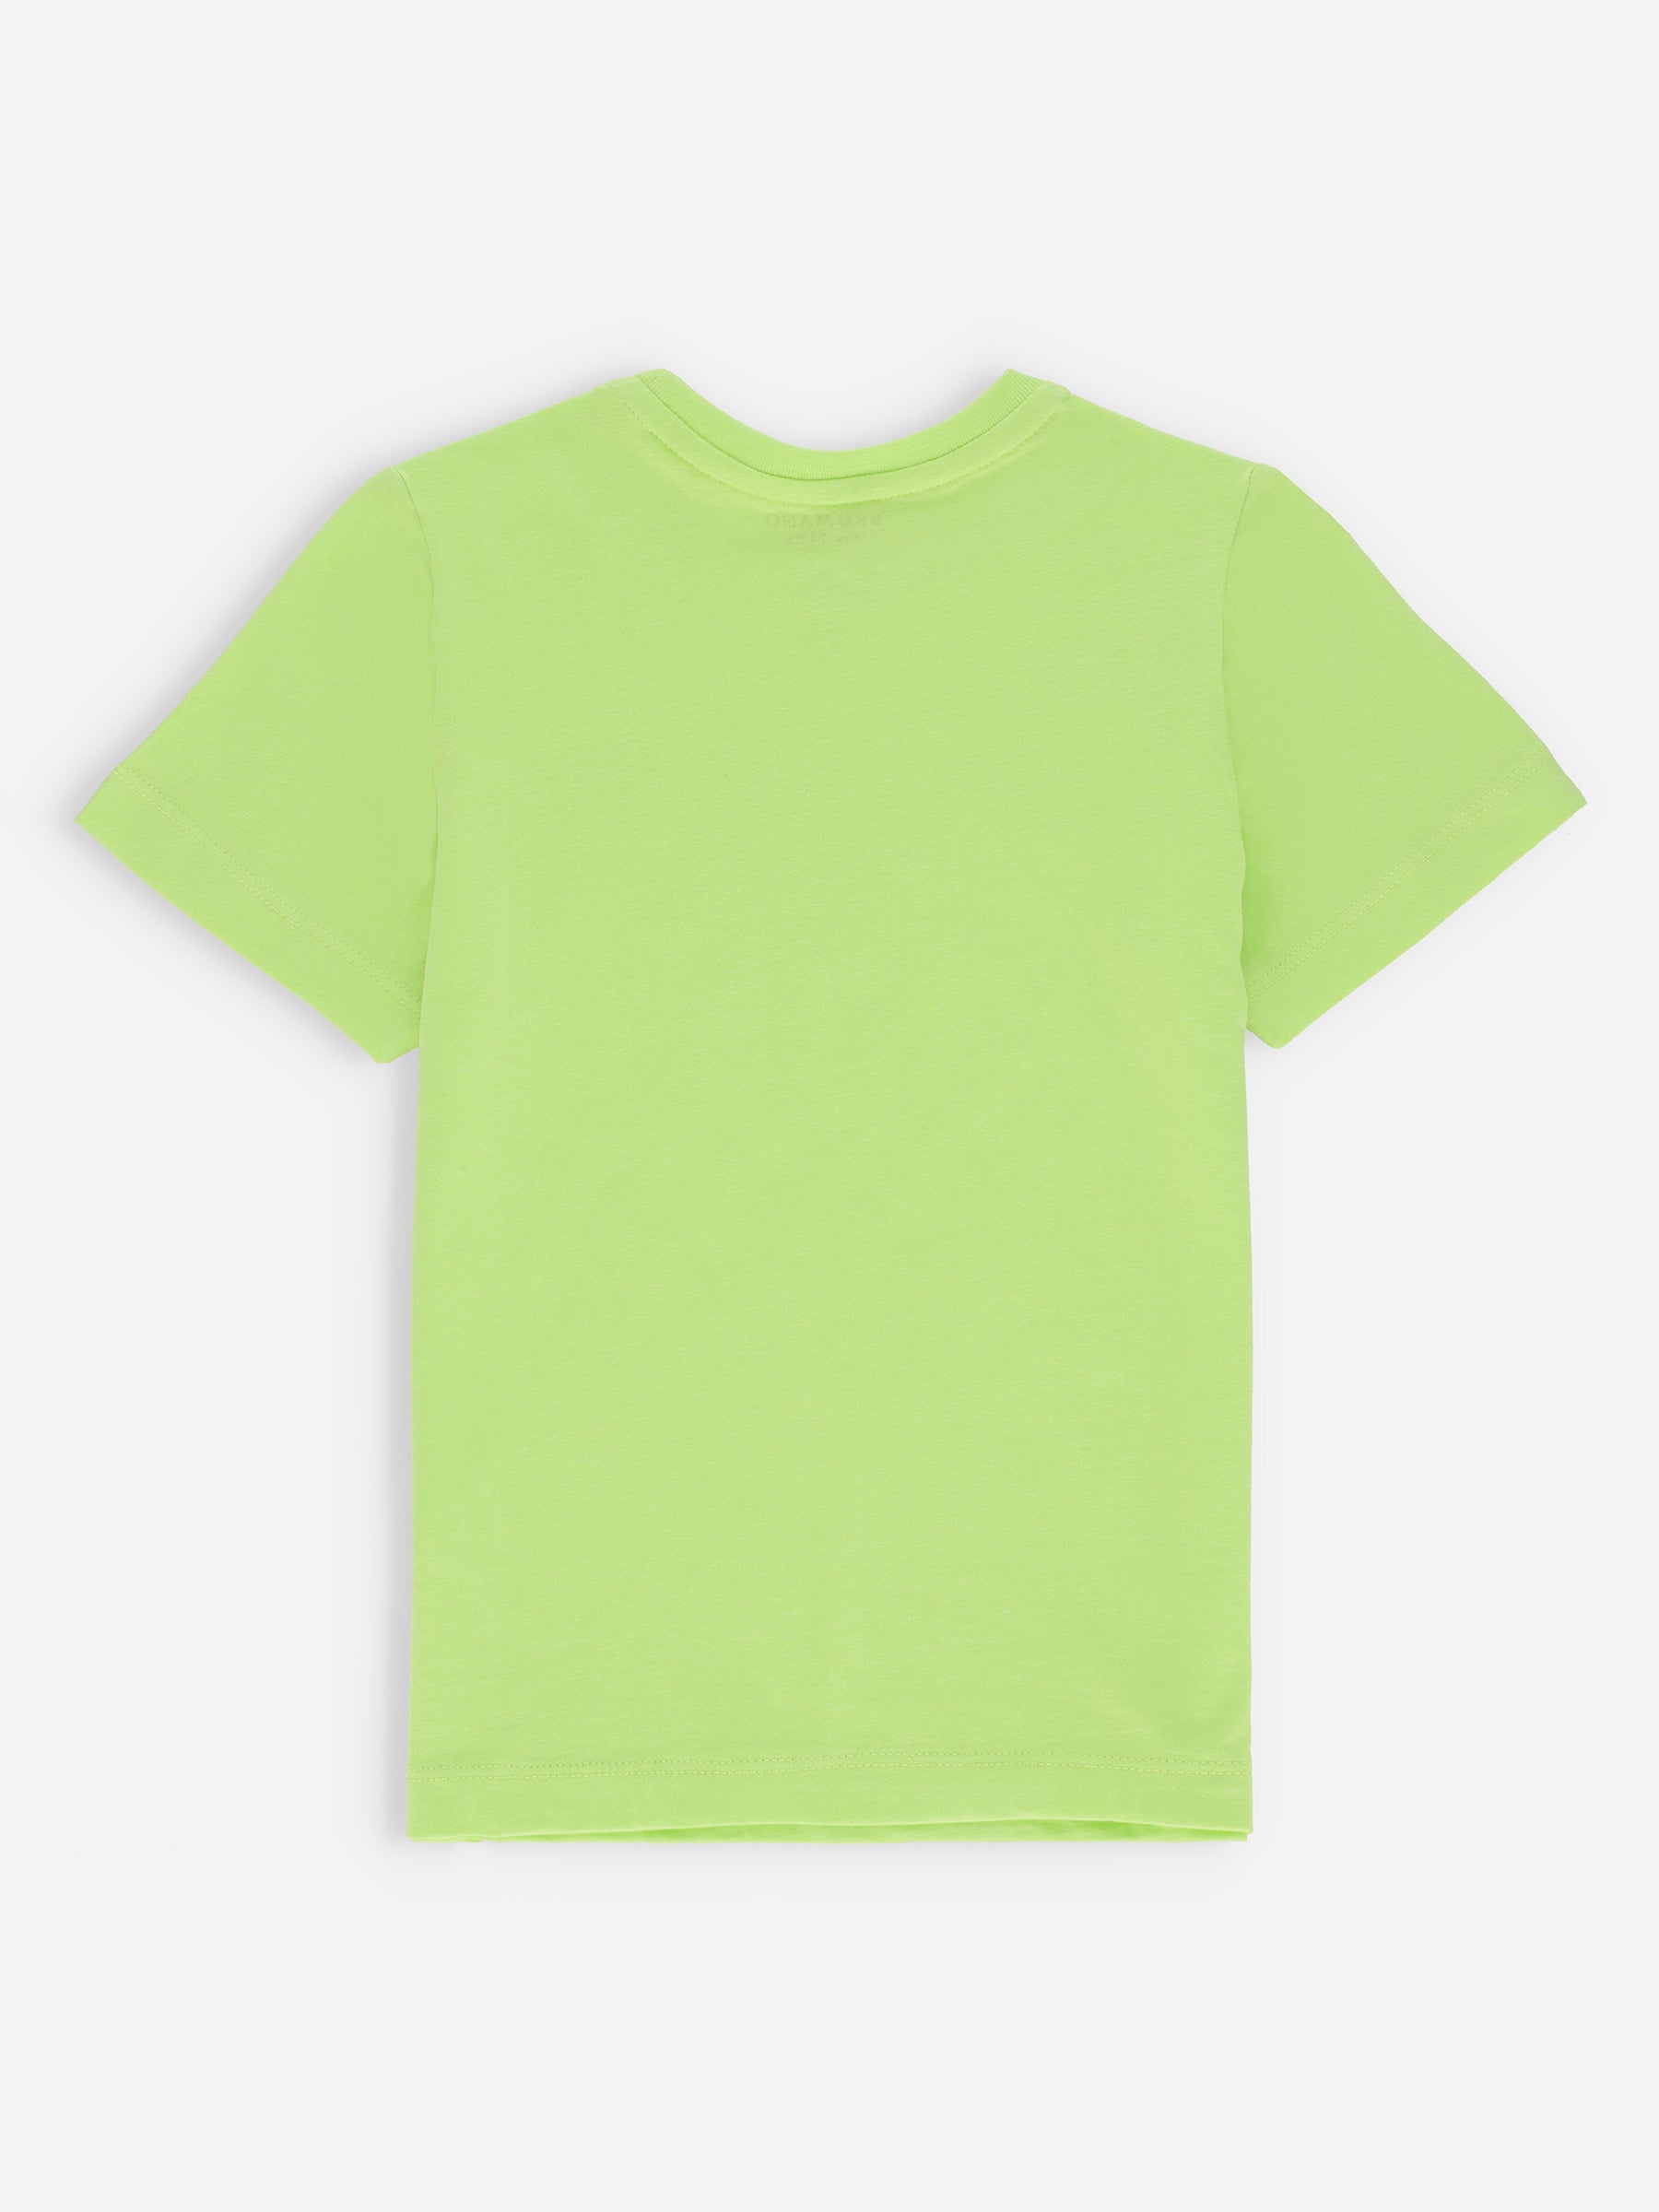 Neon Green Basic Crew Neck Casual T-Shirt Brumano Pakistan